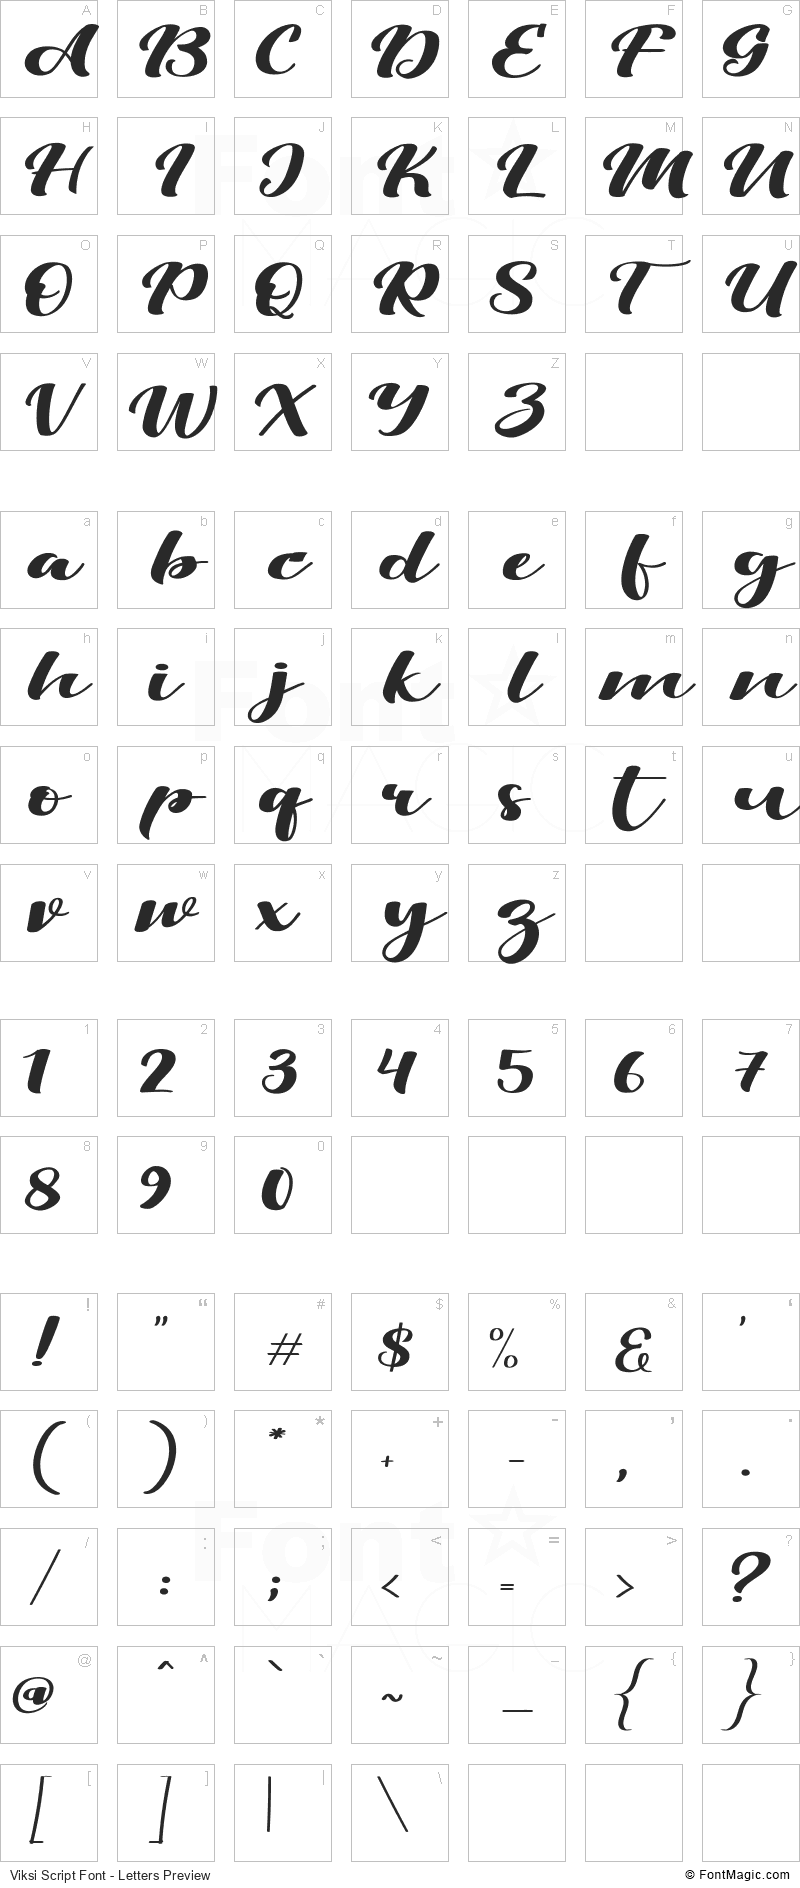 Viksi Script Font - All Latters Preview Chart